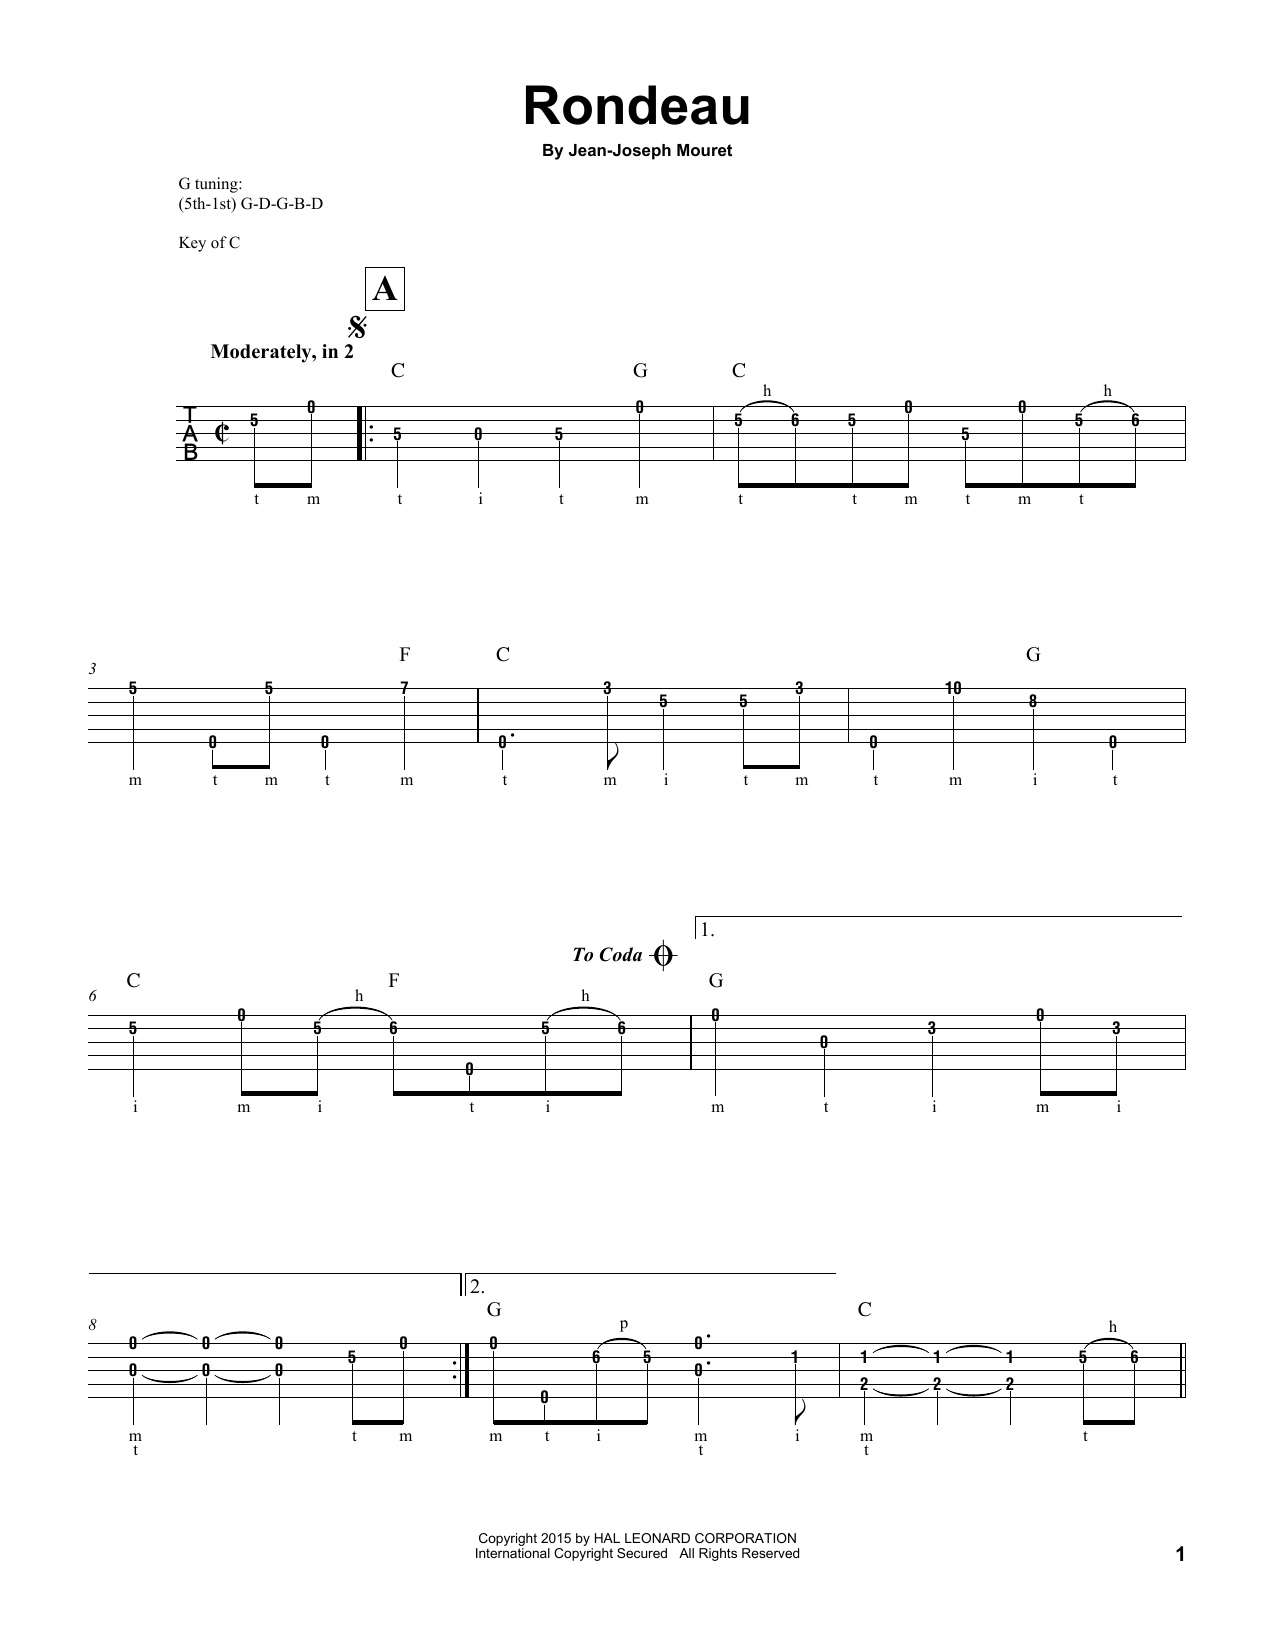 Jean-Joseph Mouret Fanfare Rondeau Sheet Music Notes & Chords for Trumpet Duet - Download or Print PDF